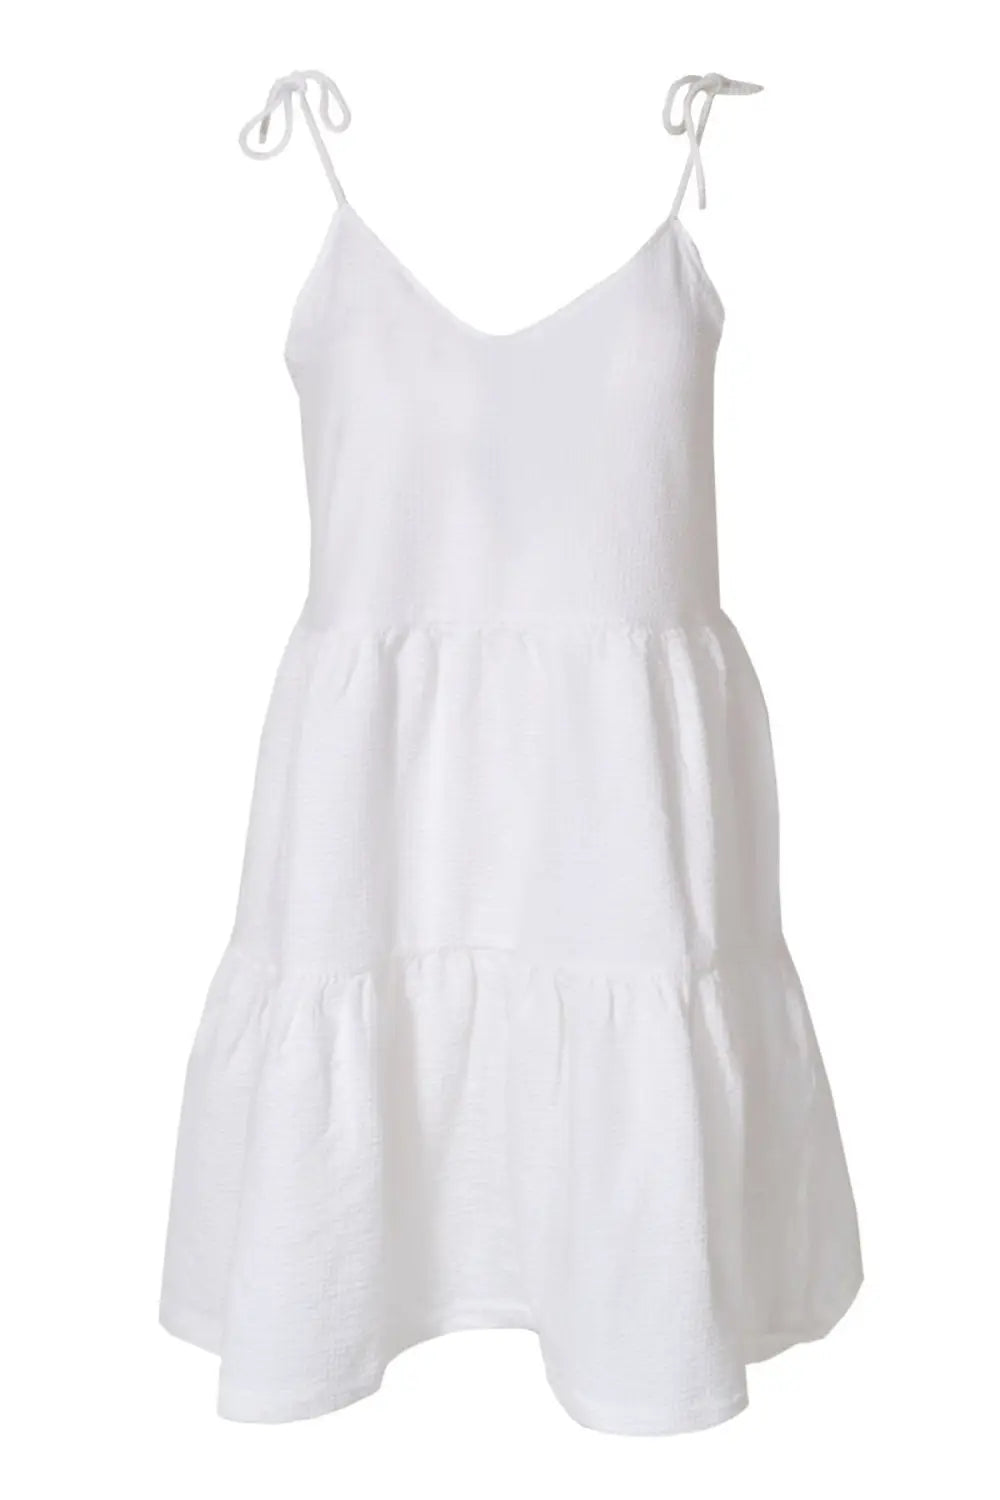 H&M Textured Stretch Sun Dress